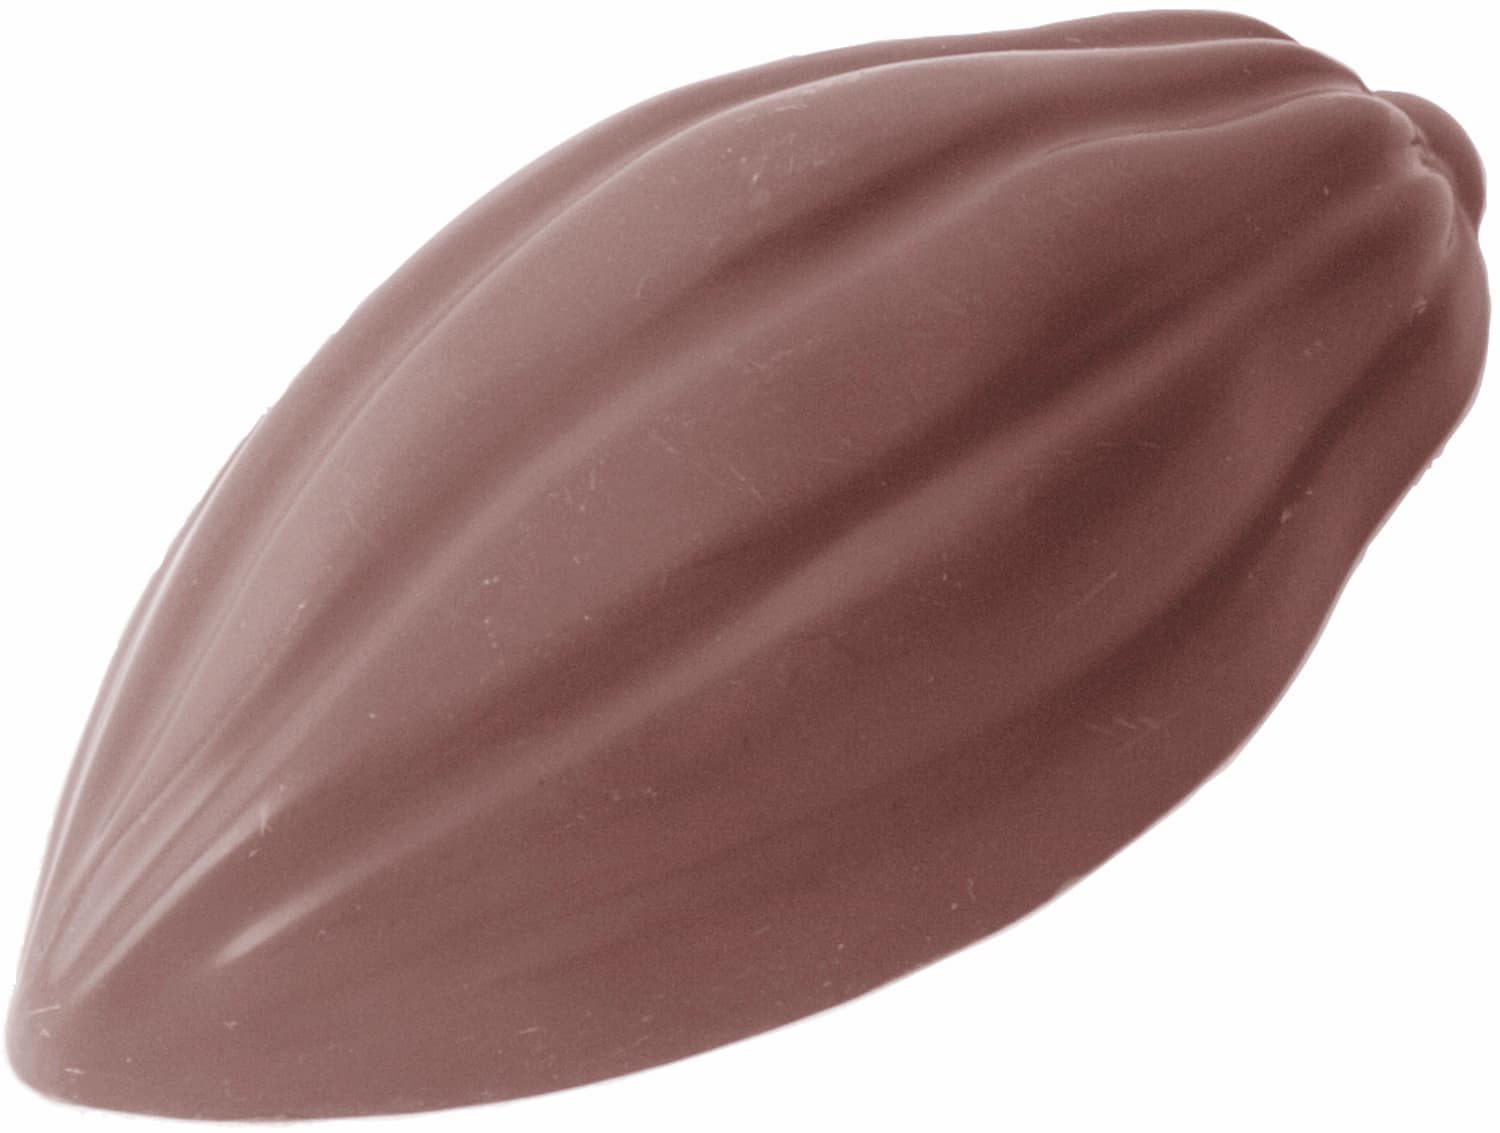 Chocolate mould "Cocoa bean" 421558 421558